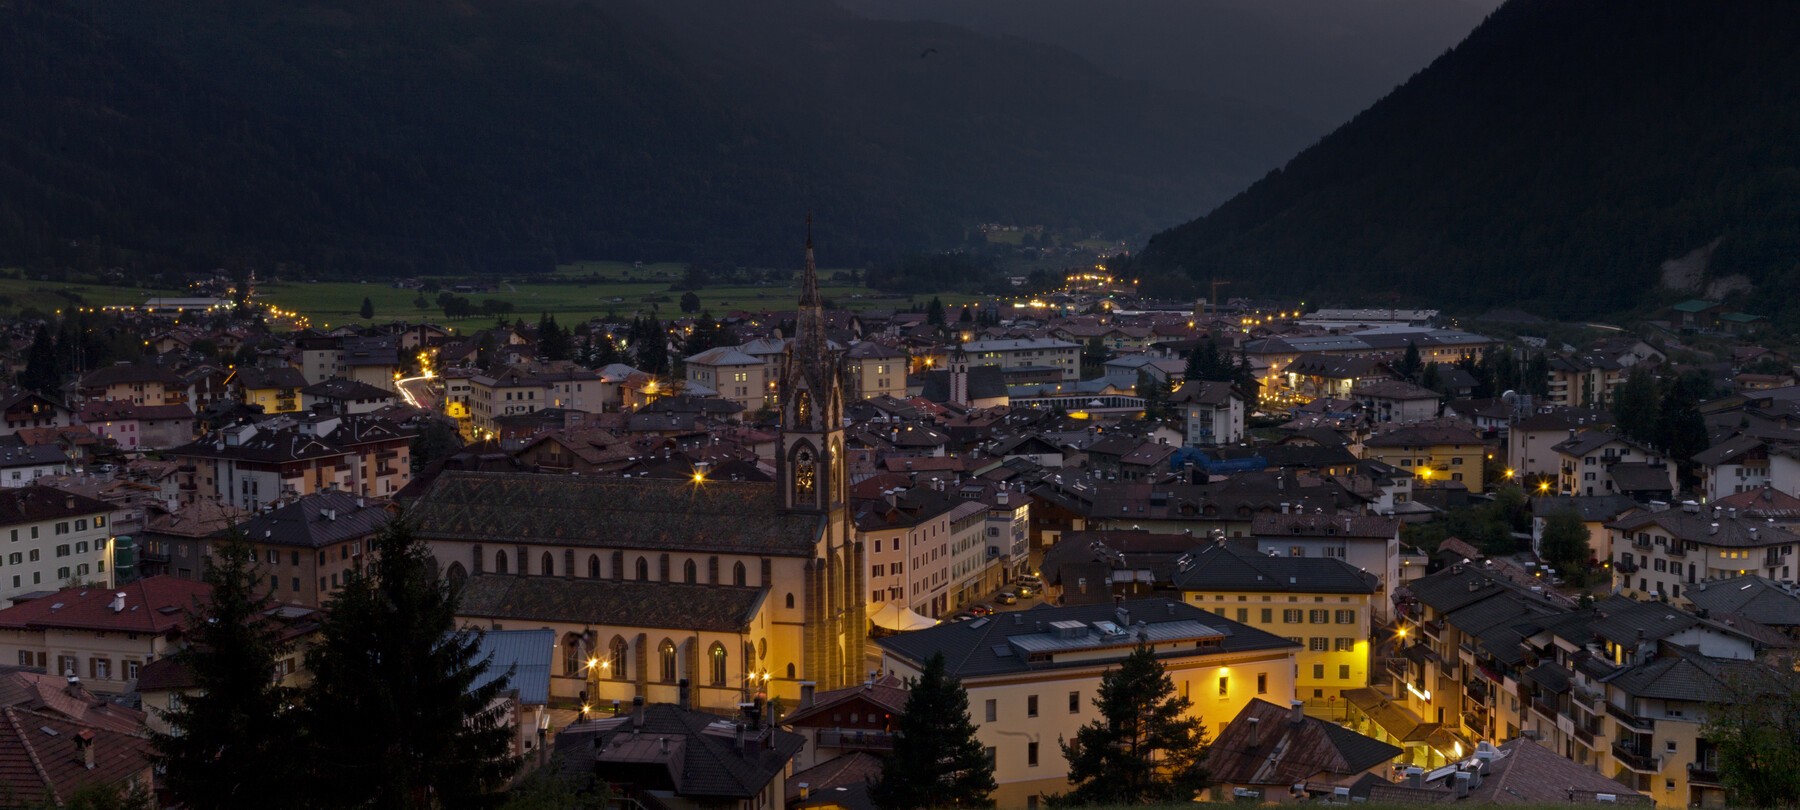 The Dolomites, a precious site for science and nature: the Nave d’Oro in Predazzo